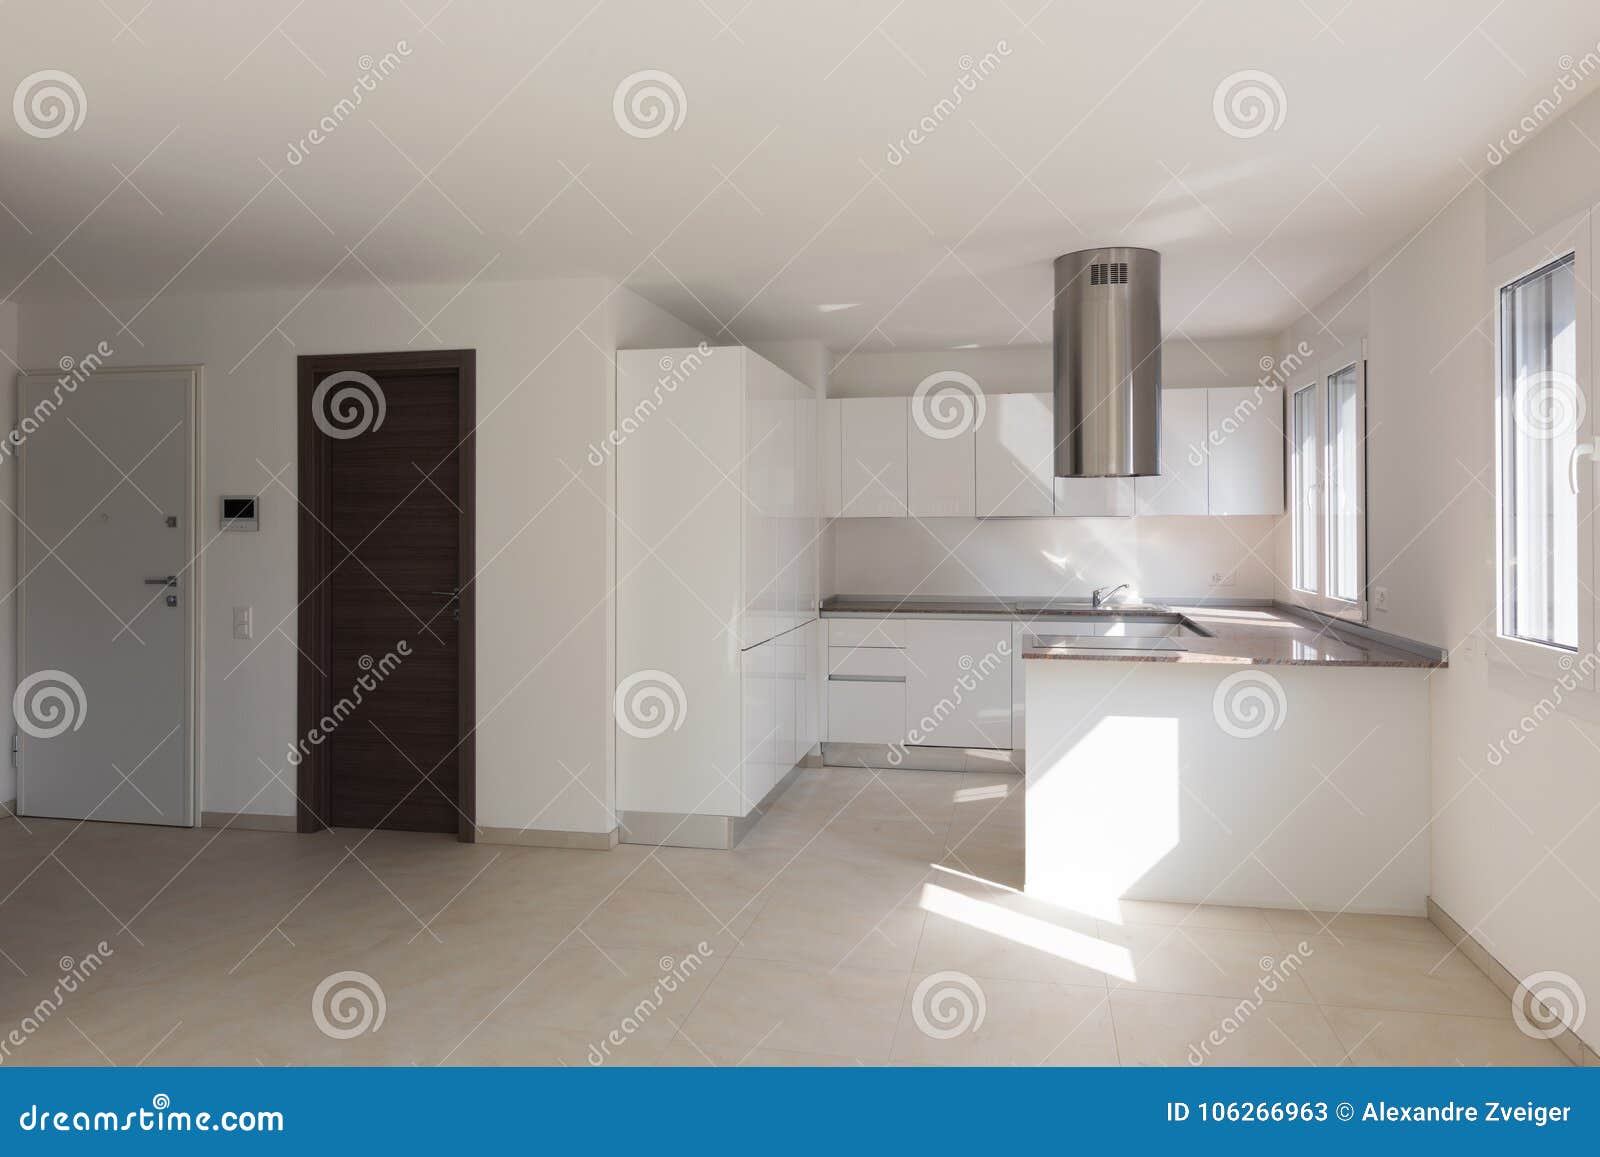 modern apartment, two doors, kitchen